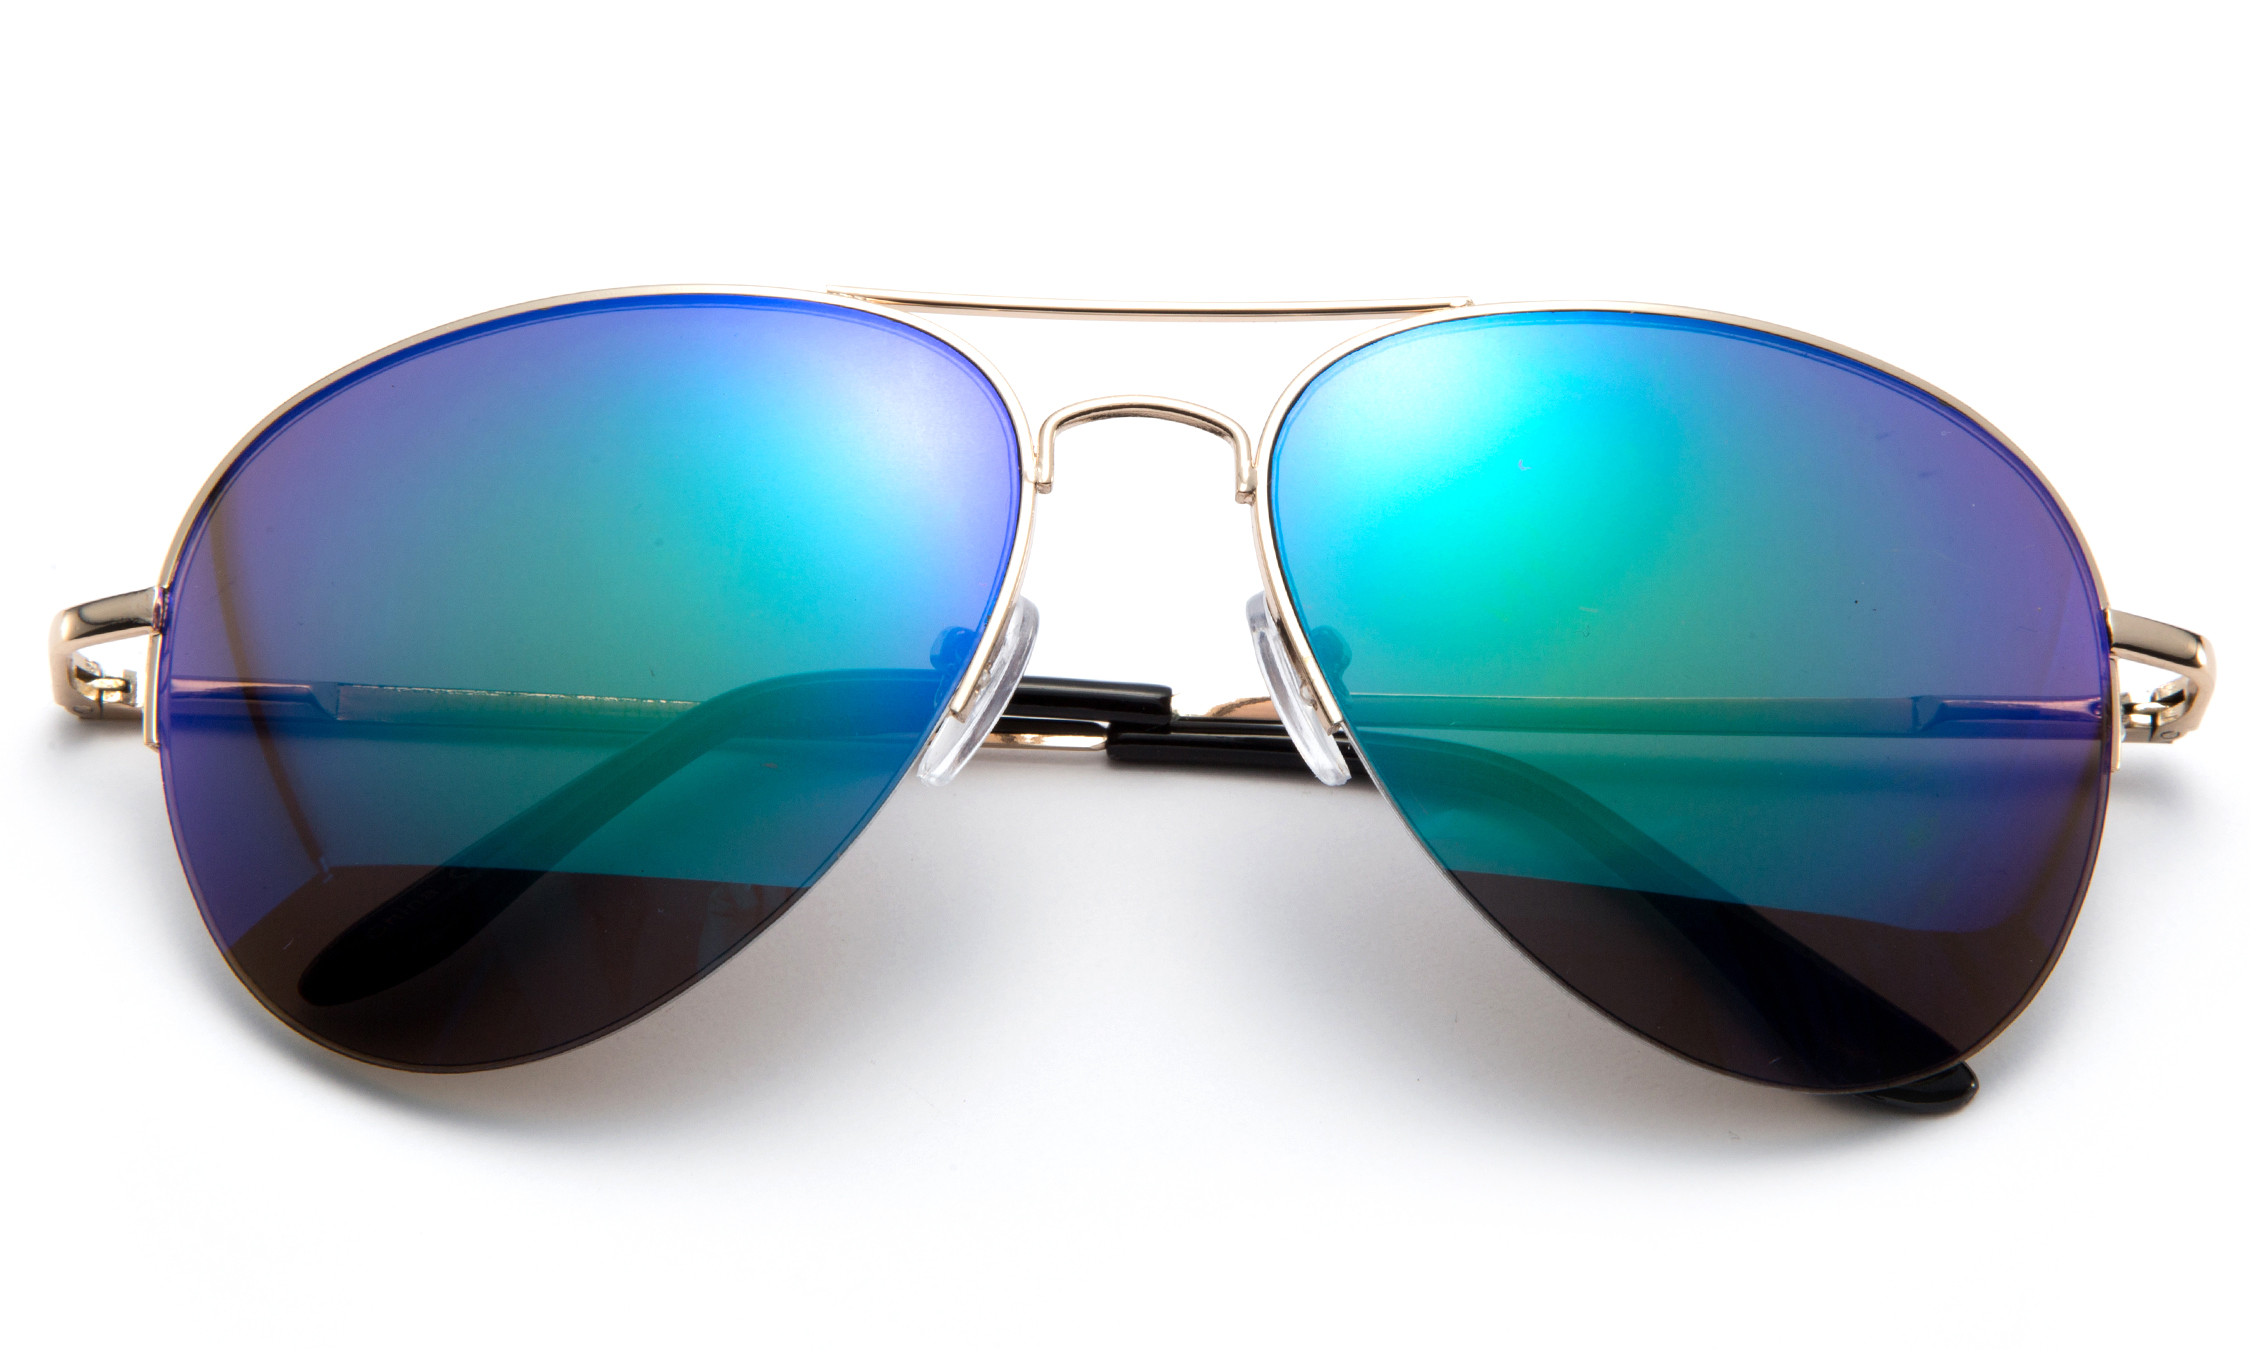 Newbee Fashion -Classic Aviator Sunglasses Flash Full Mirror lenses Semi Half Frame for Men Women with Spring Hinge UV Protection - image 2 of 2